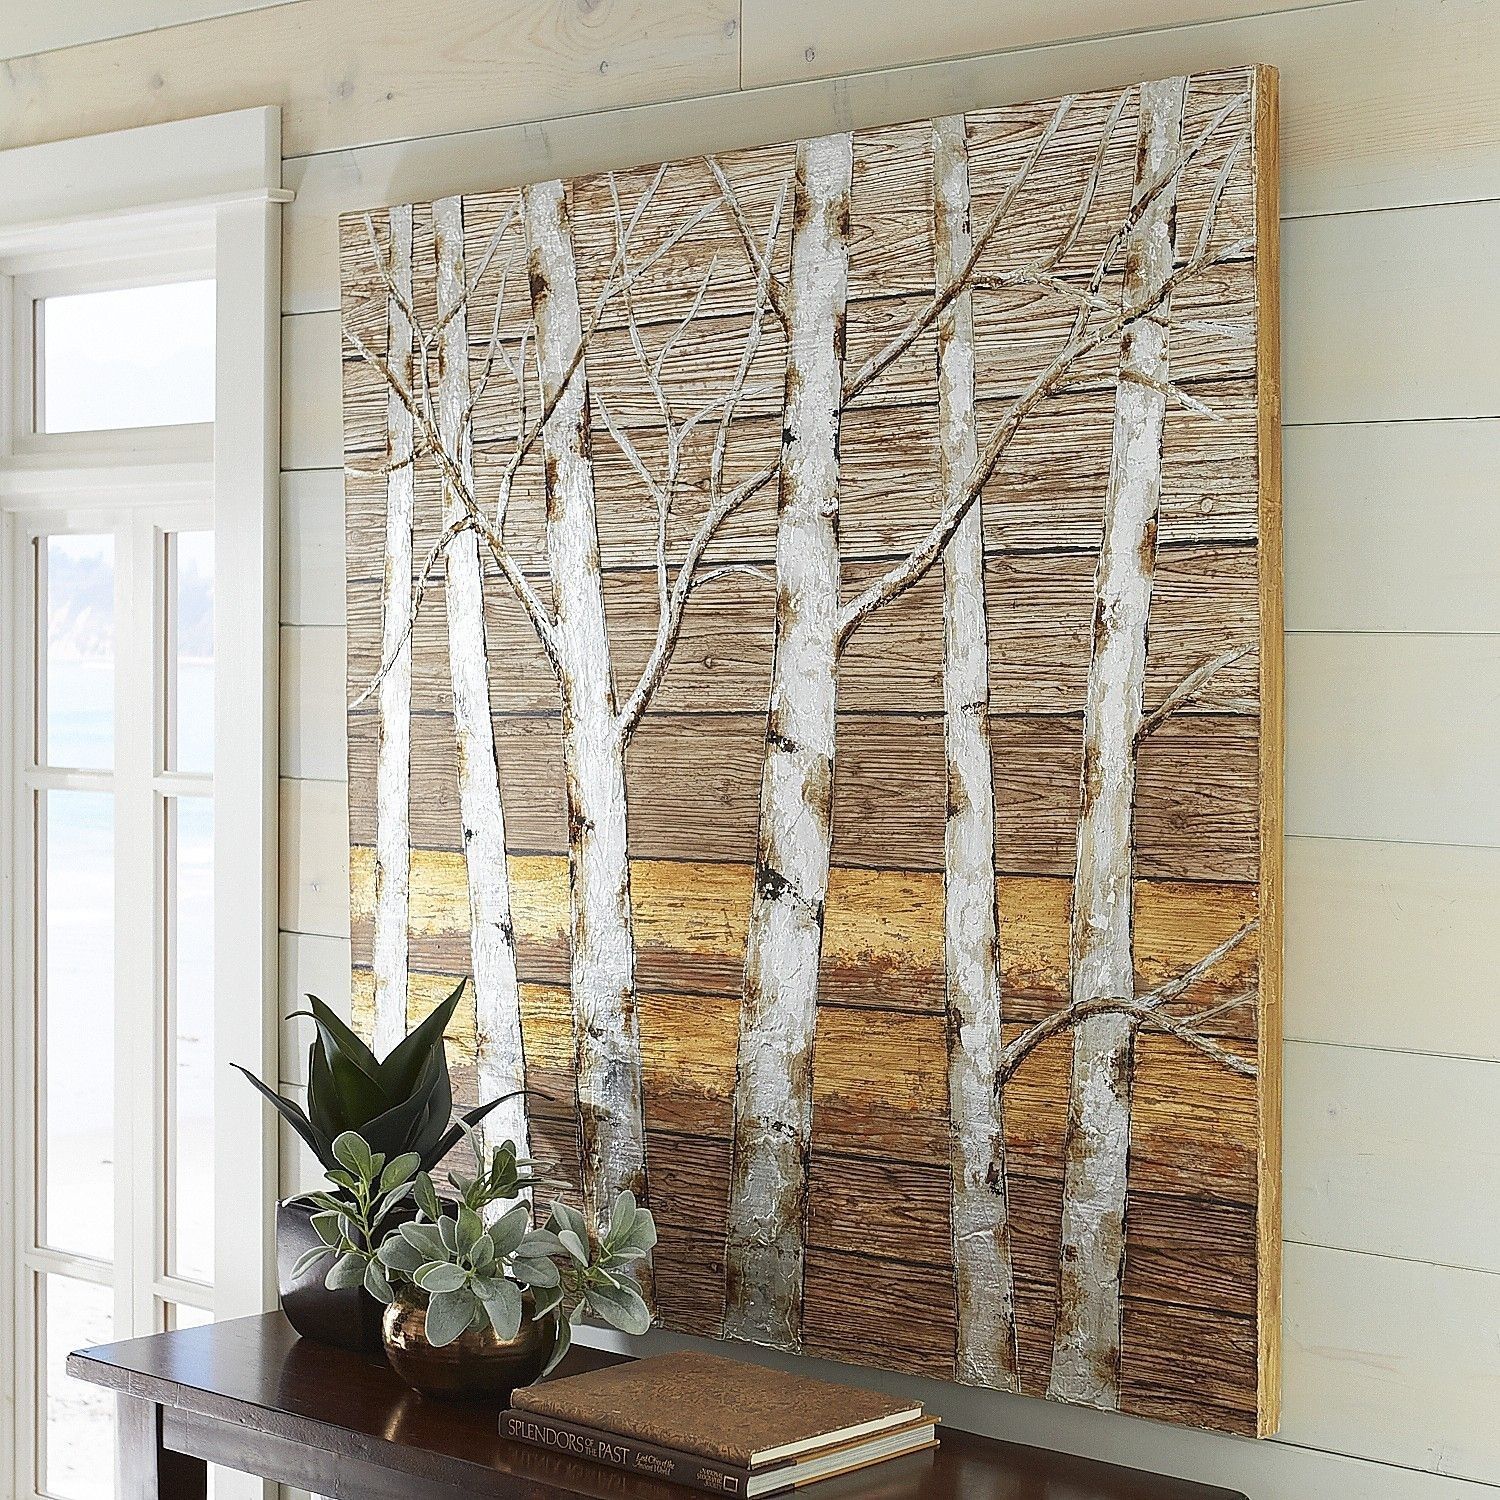 Metallic Birch Trees Wall Art – 4x4 | Products | Pinterest | Tree Regarding Birch Tree Wall Art (View 4 of 20)